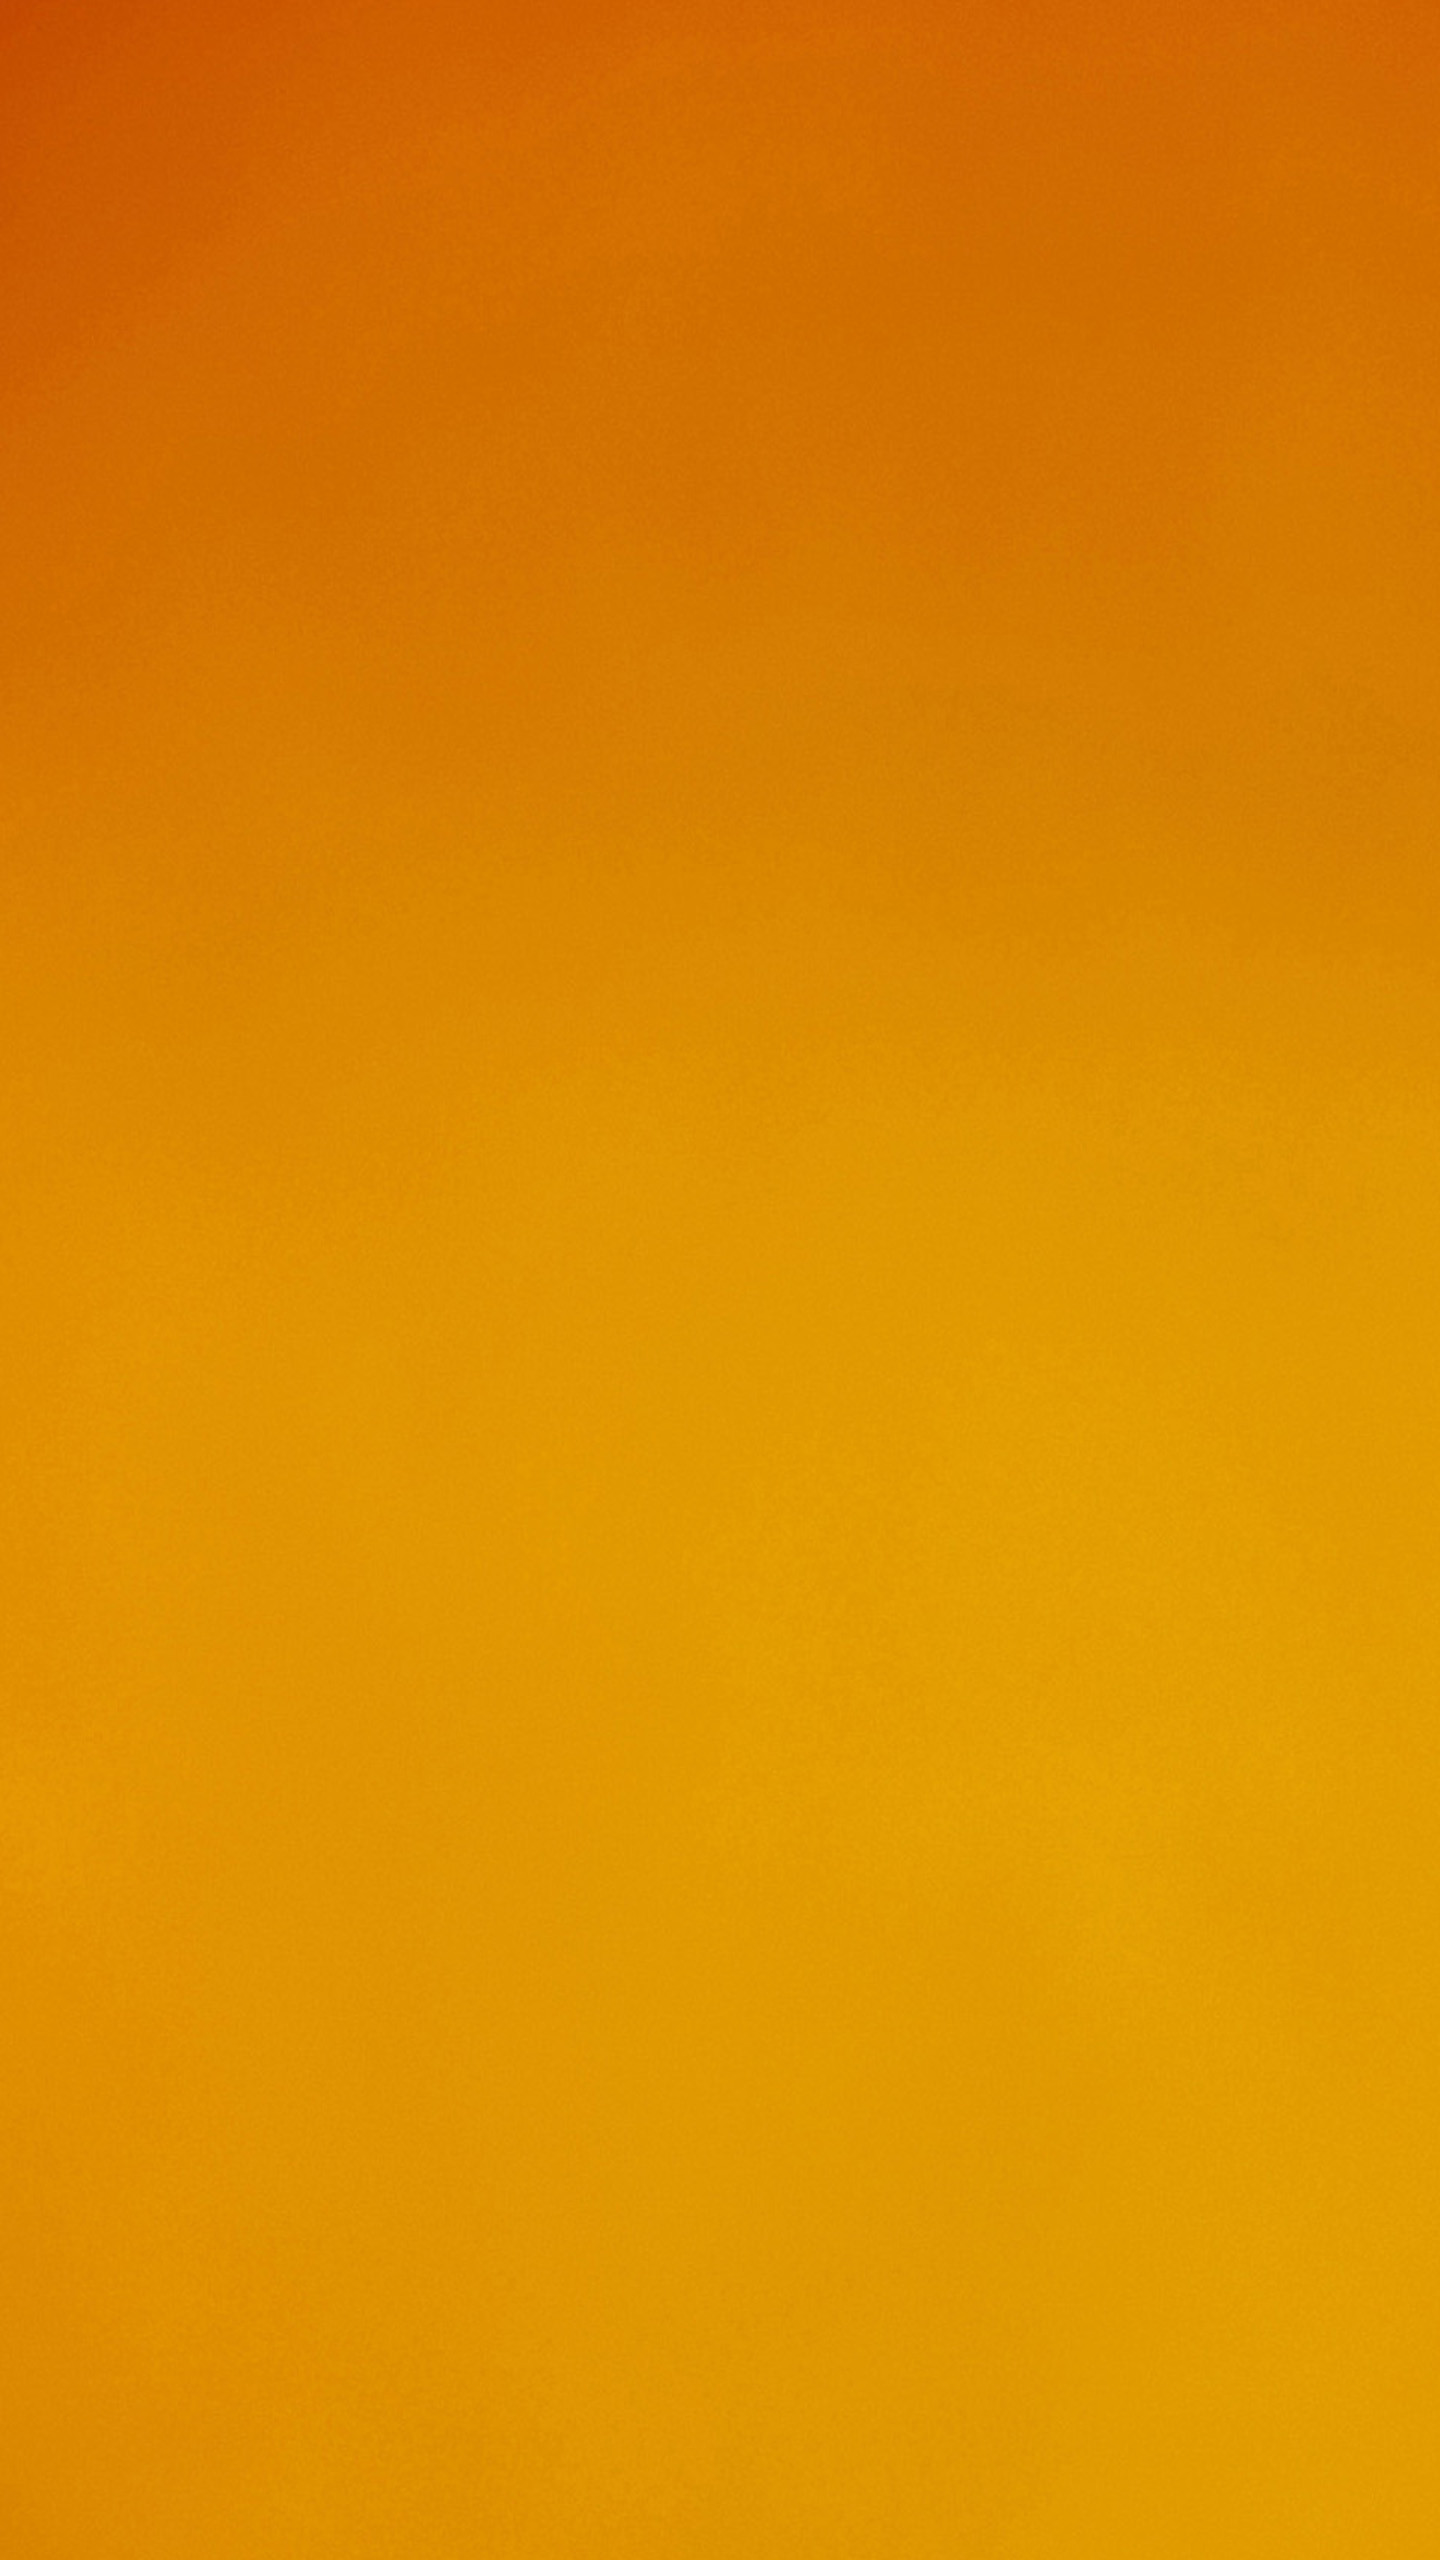 1440x2560 Yellow background 1 Galaxy S6 Wallpaper